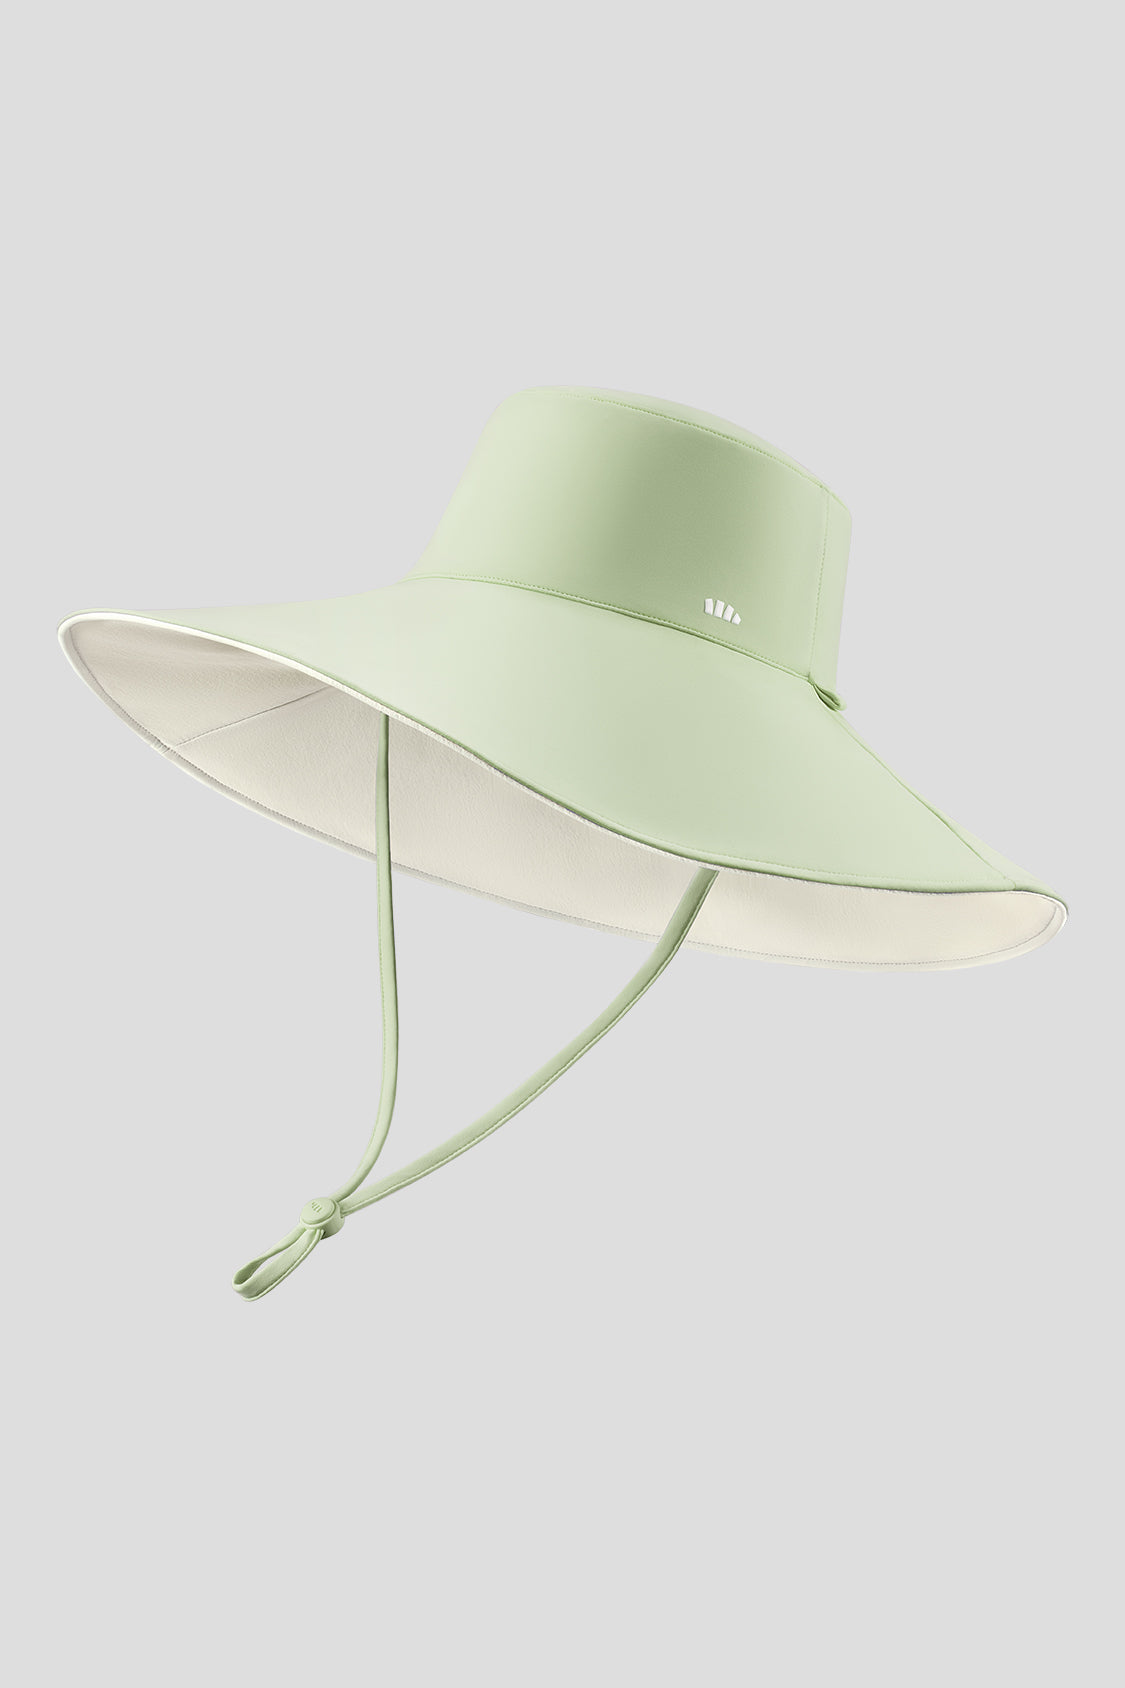 beneunder women's sun hats upf50+ #color_leat pine green - white